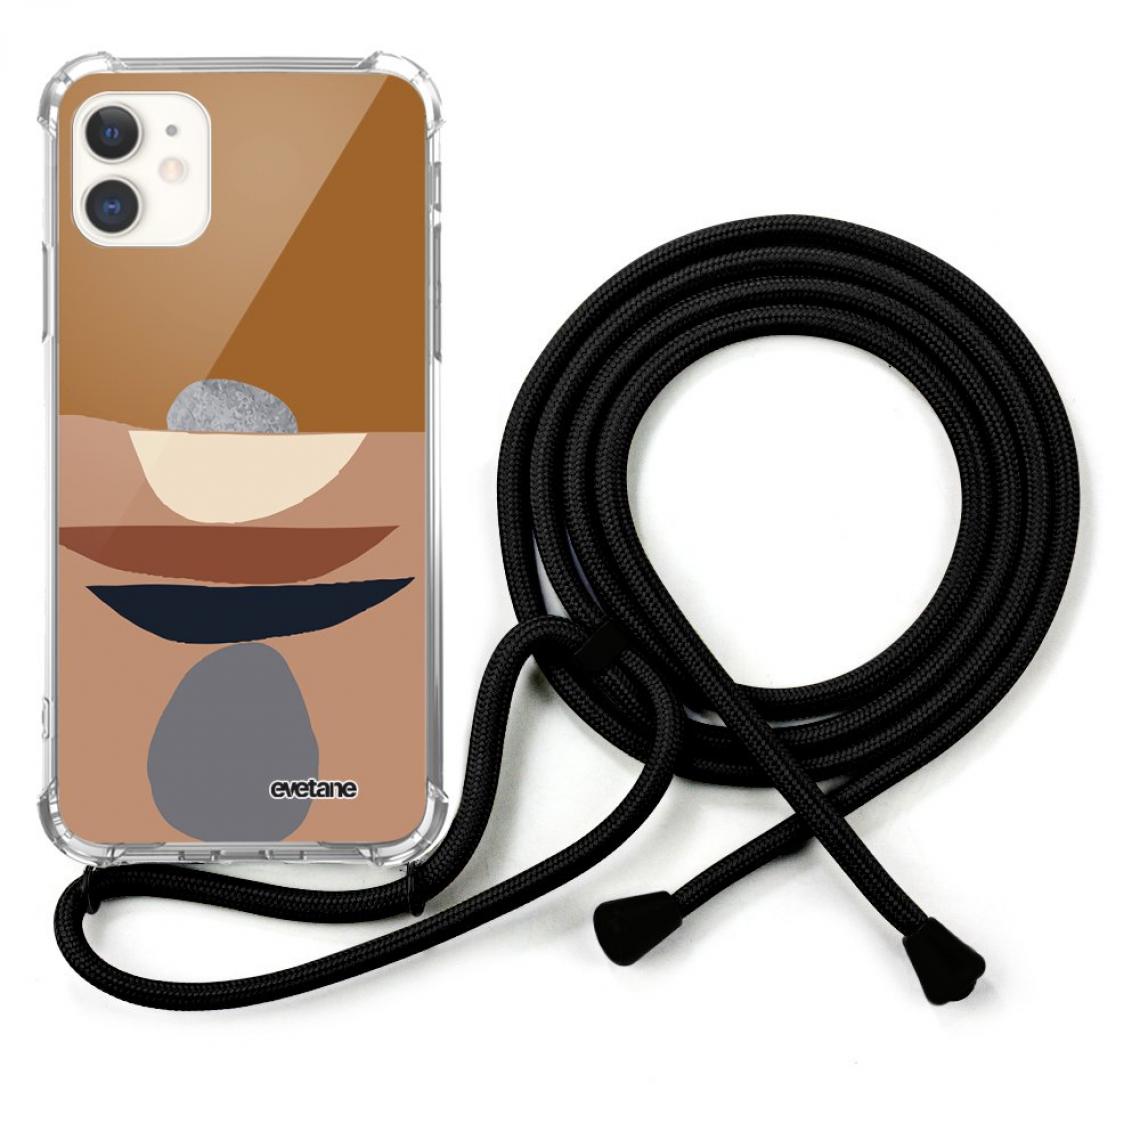 Evetane - Coque iPhone 12 Mini coque avec cordon Déco de pierres - Coque, étui smartphone